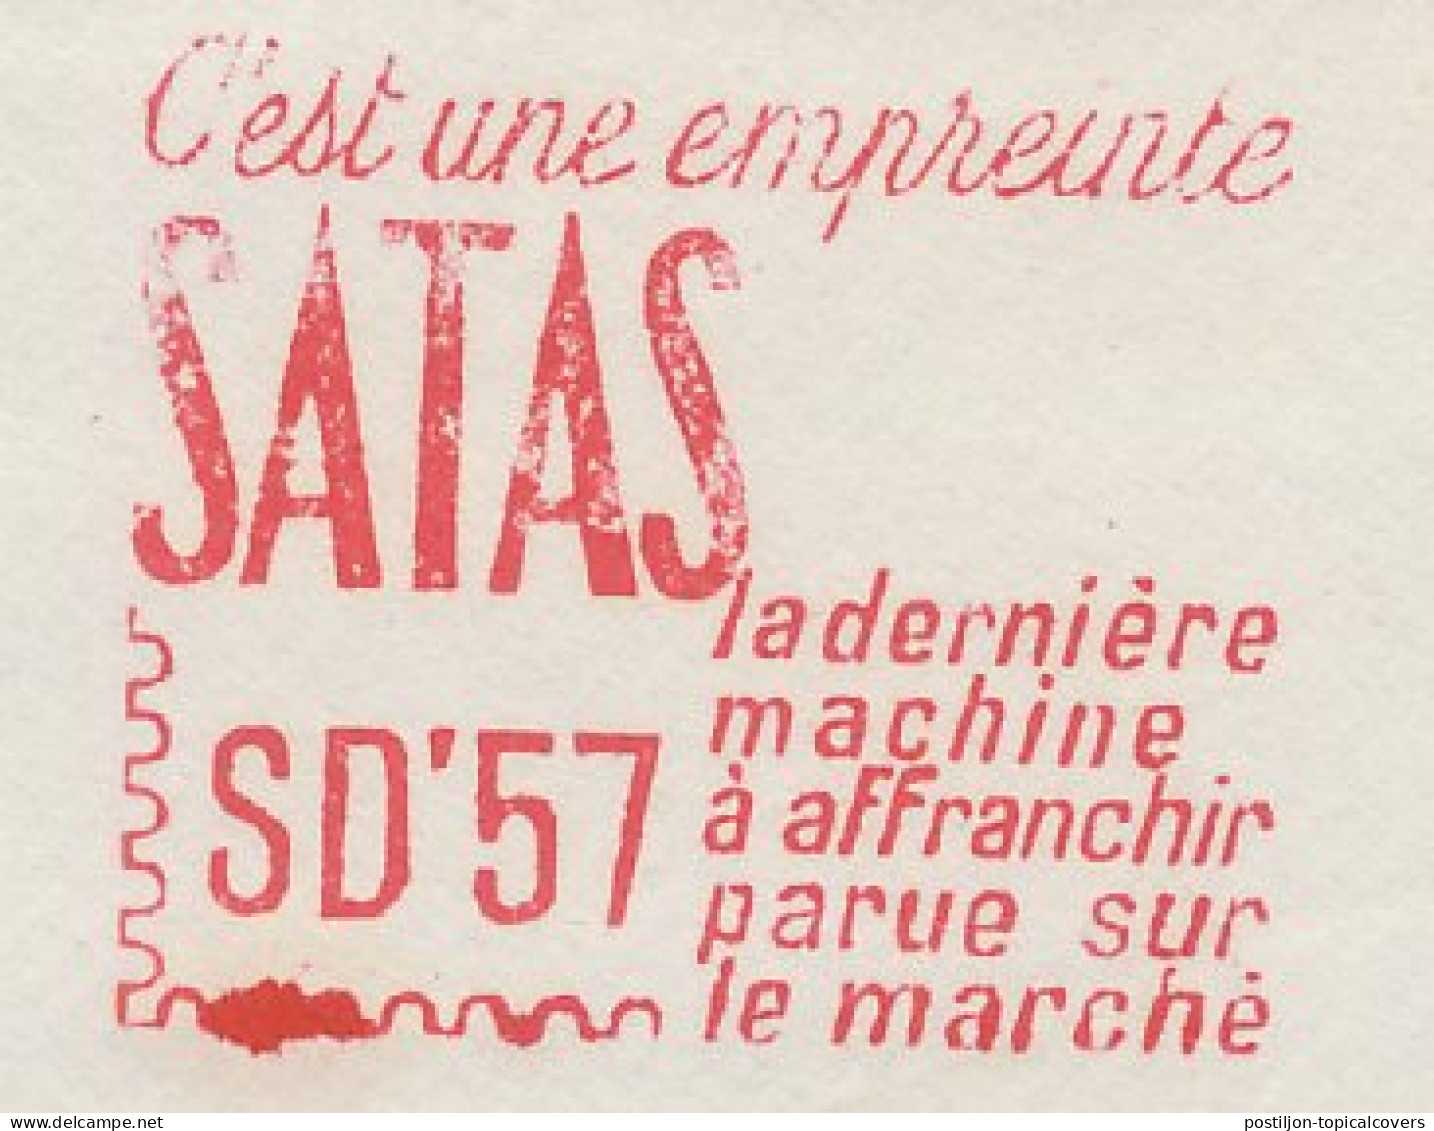 Meter Cover France 1957 SATAS - Machine Labels [ATM]